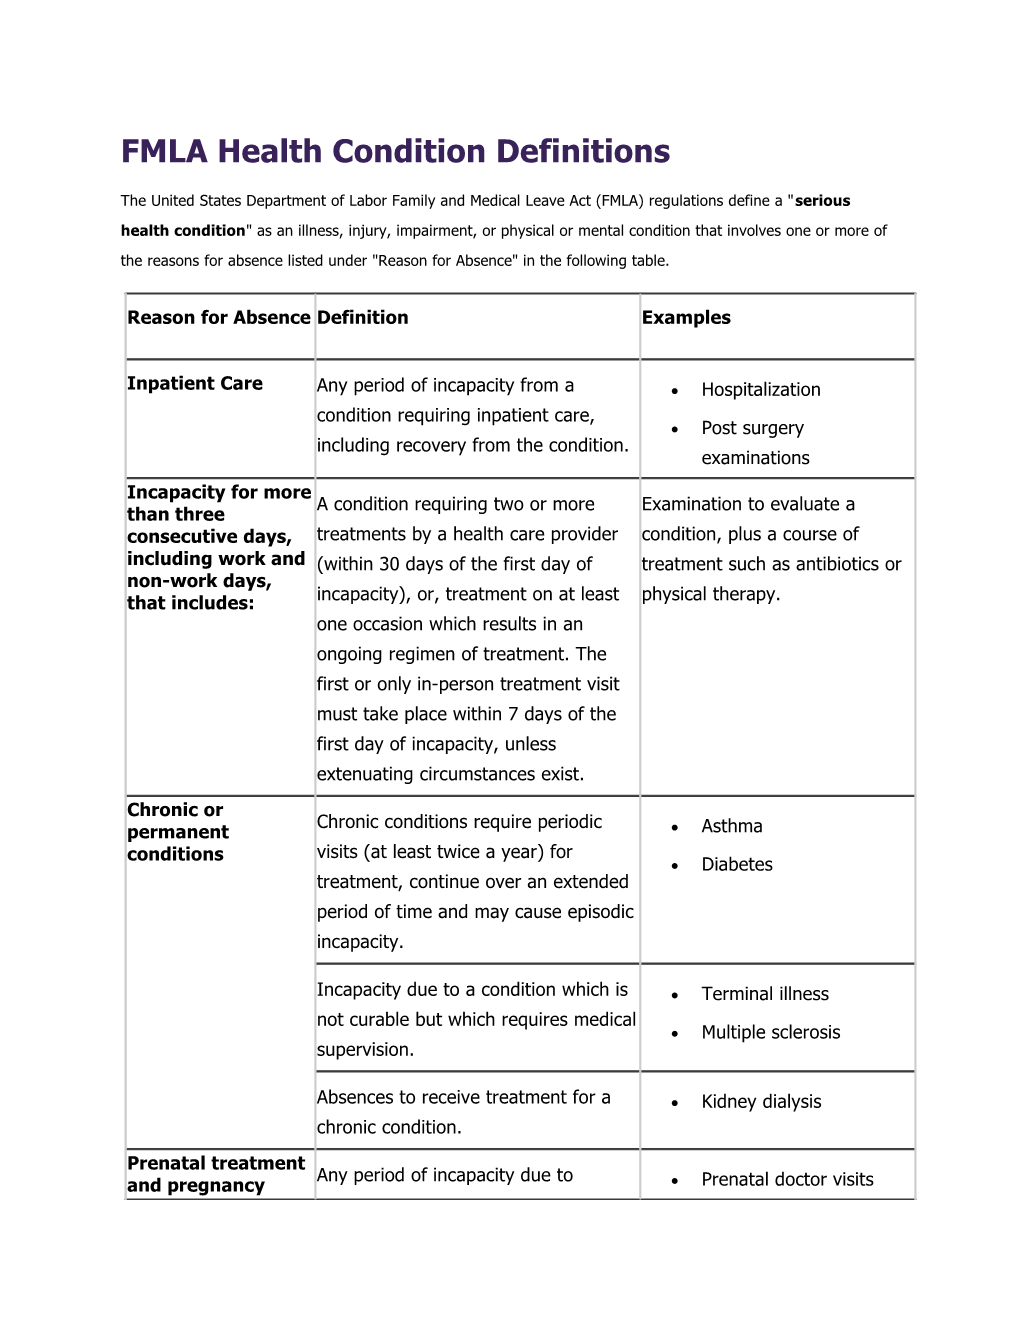 FMLA Health Condition Definitions